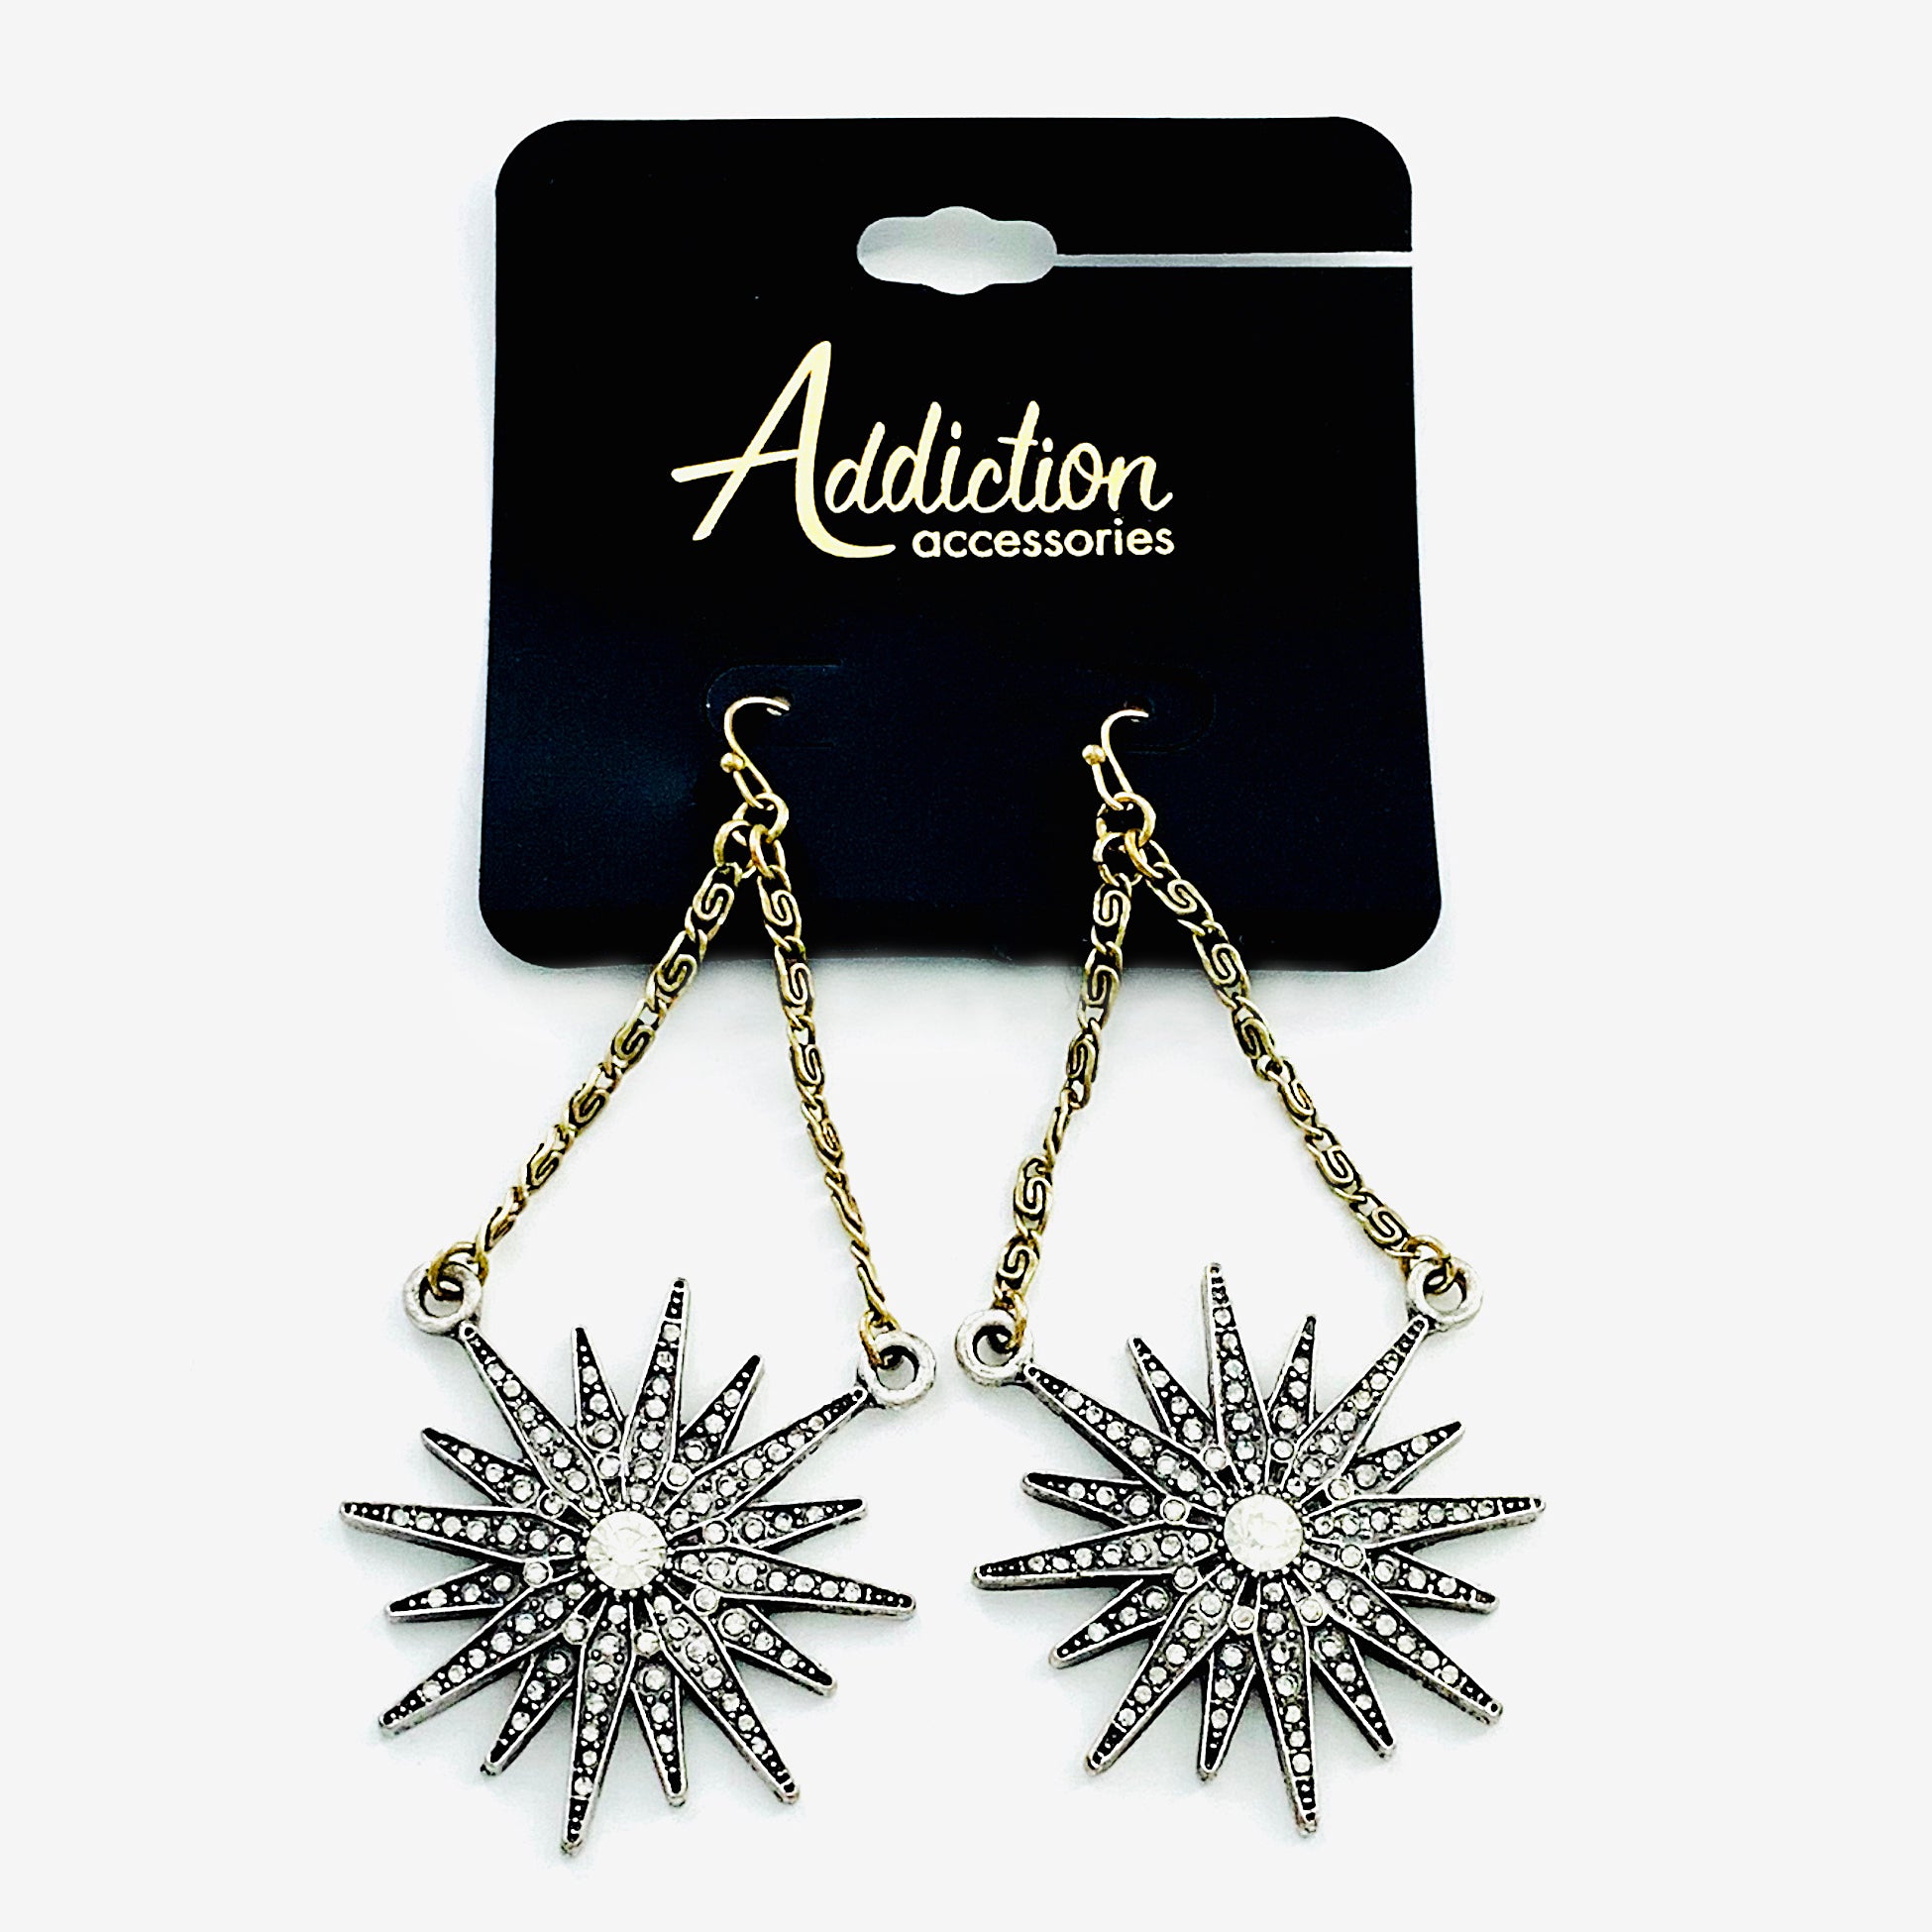 Starry starburst earrings with diamante stones